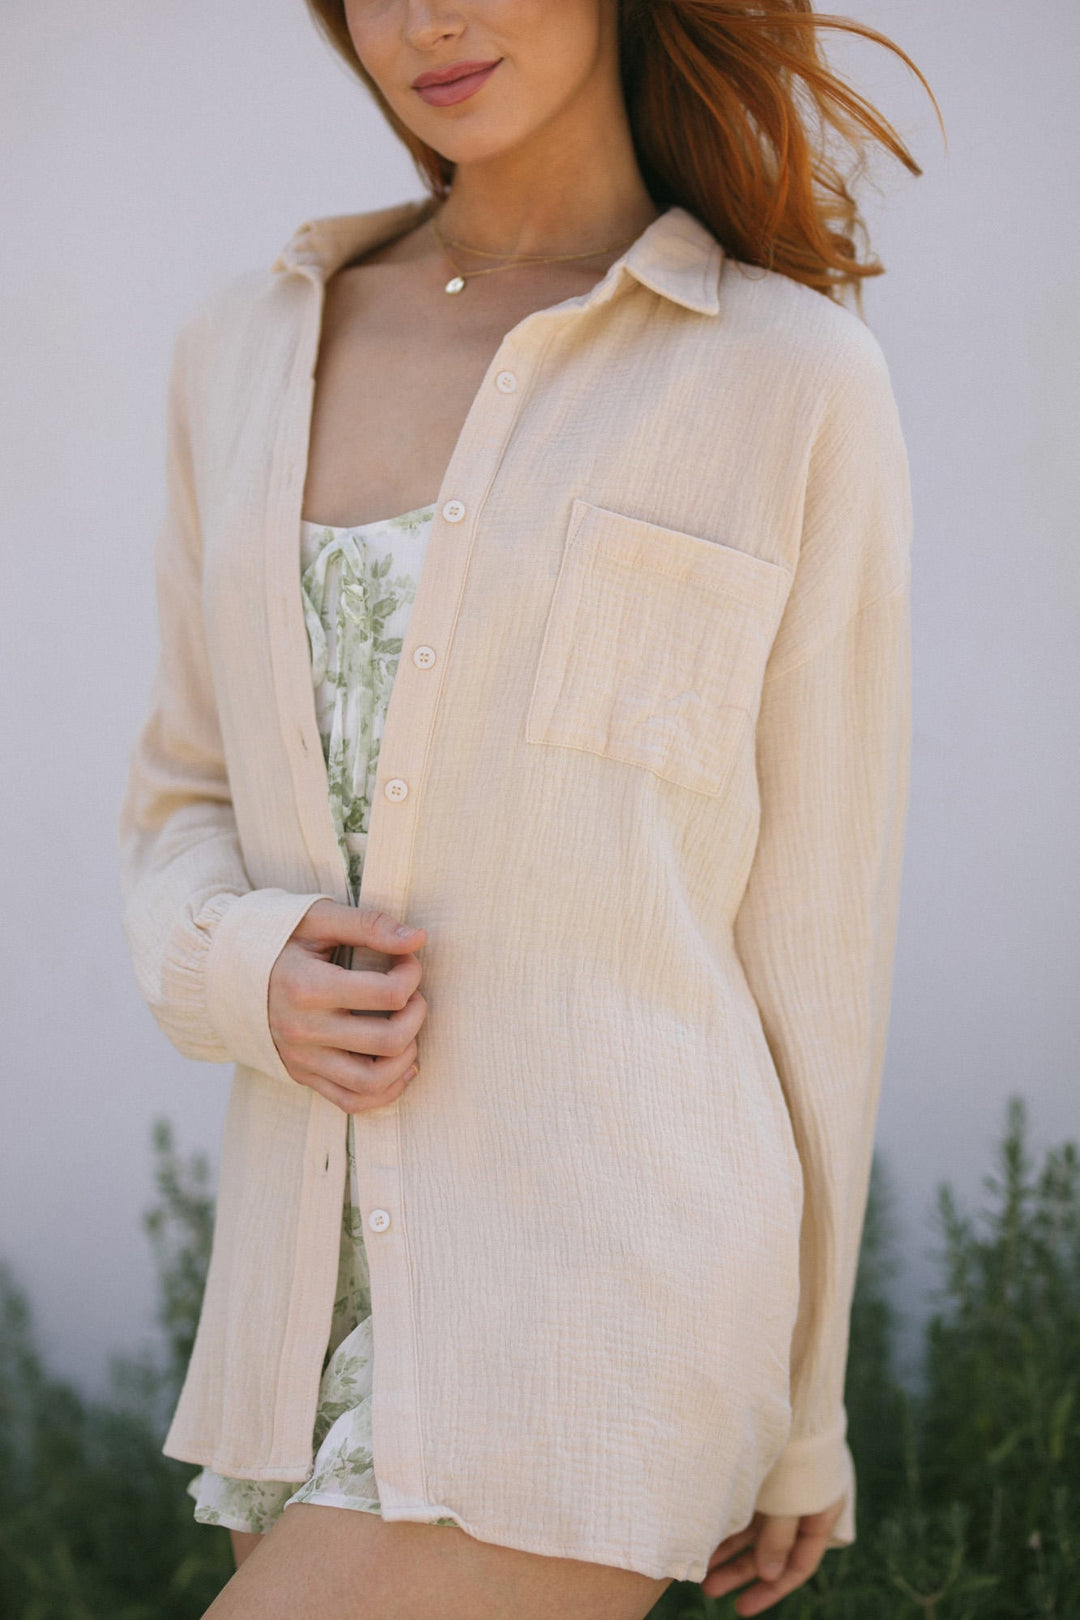 Lara Dolman Buttoned Shirt - Morning Lavender Boutique Tops